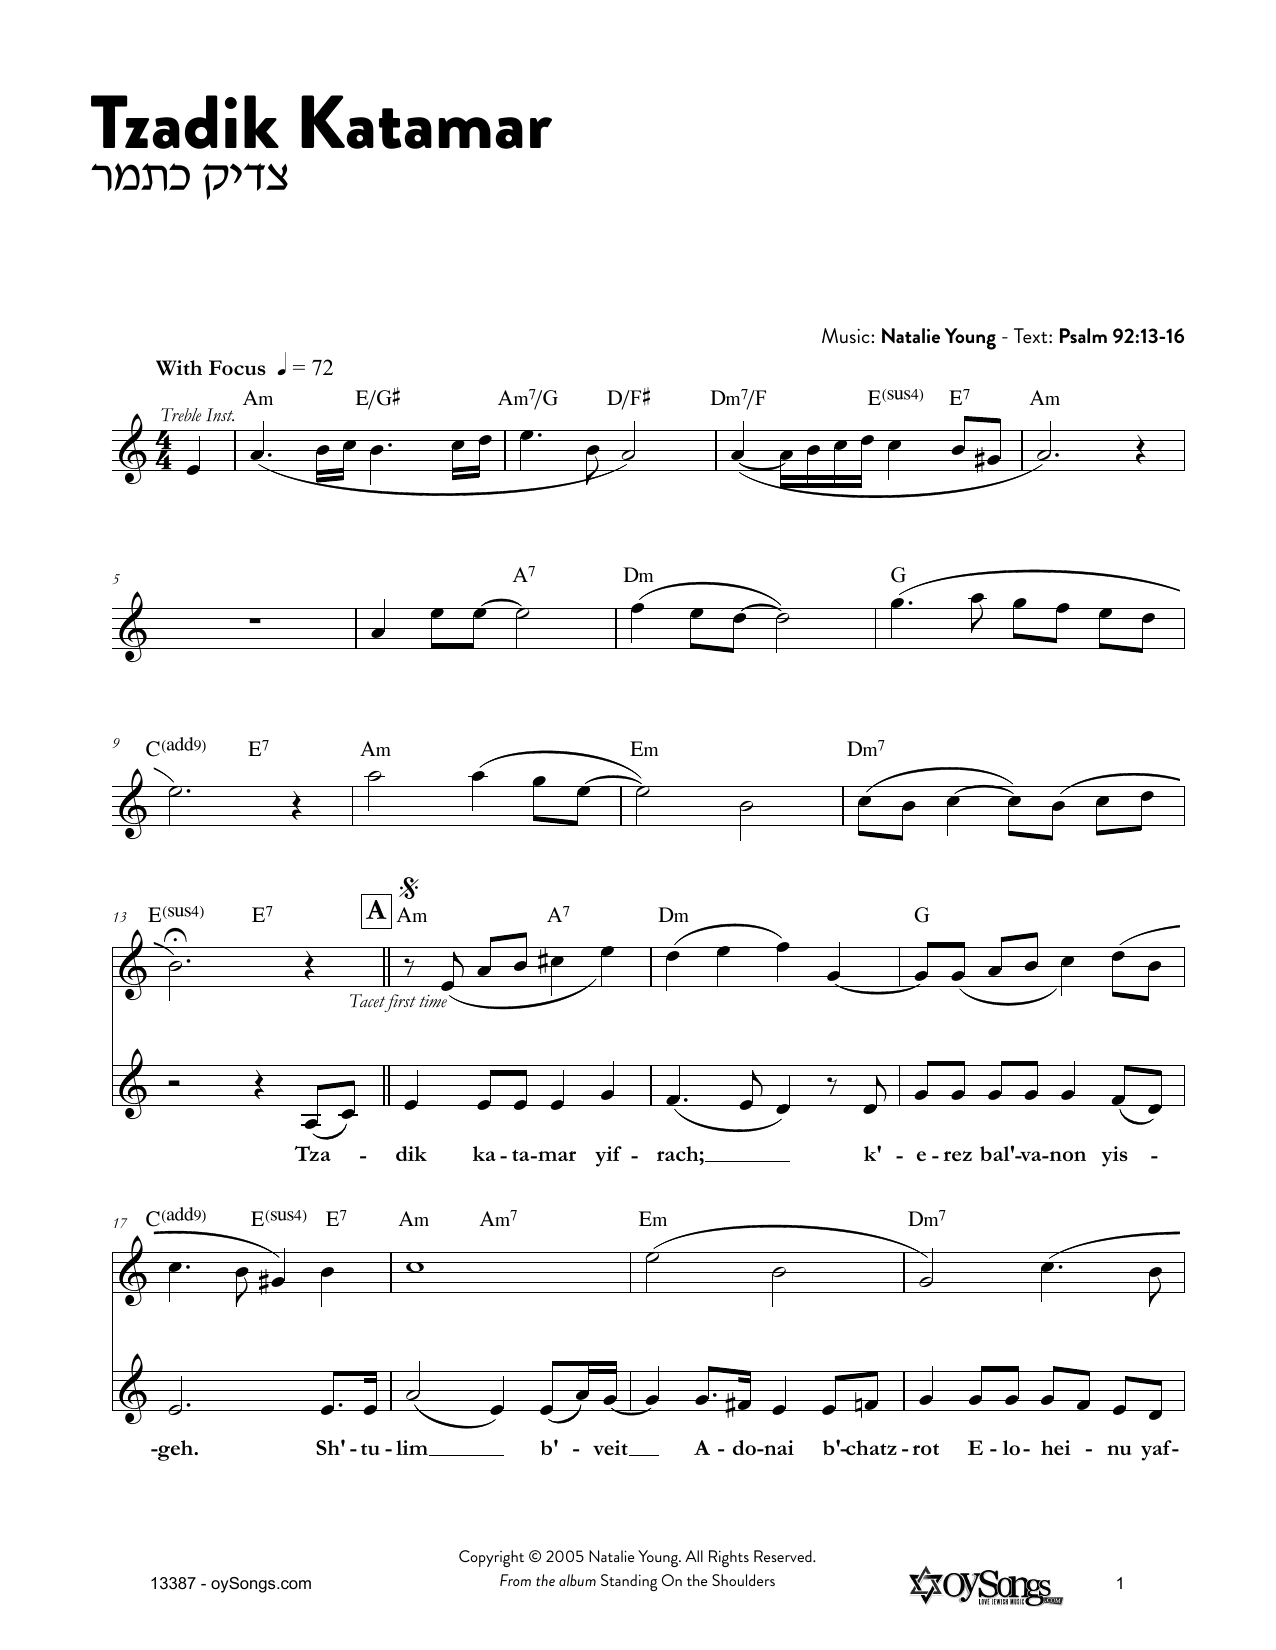 Natalie Young Tzadik Katamar Sheet Music Notes & Chords for Melody Line, Lyrics & Chords - Download or Print PDF